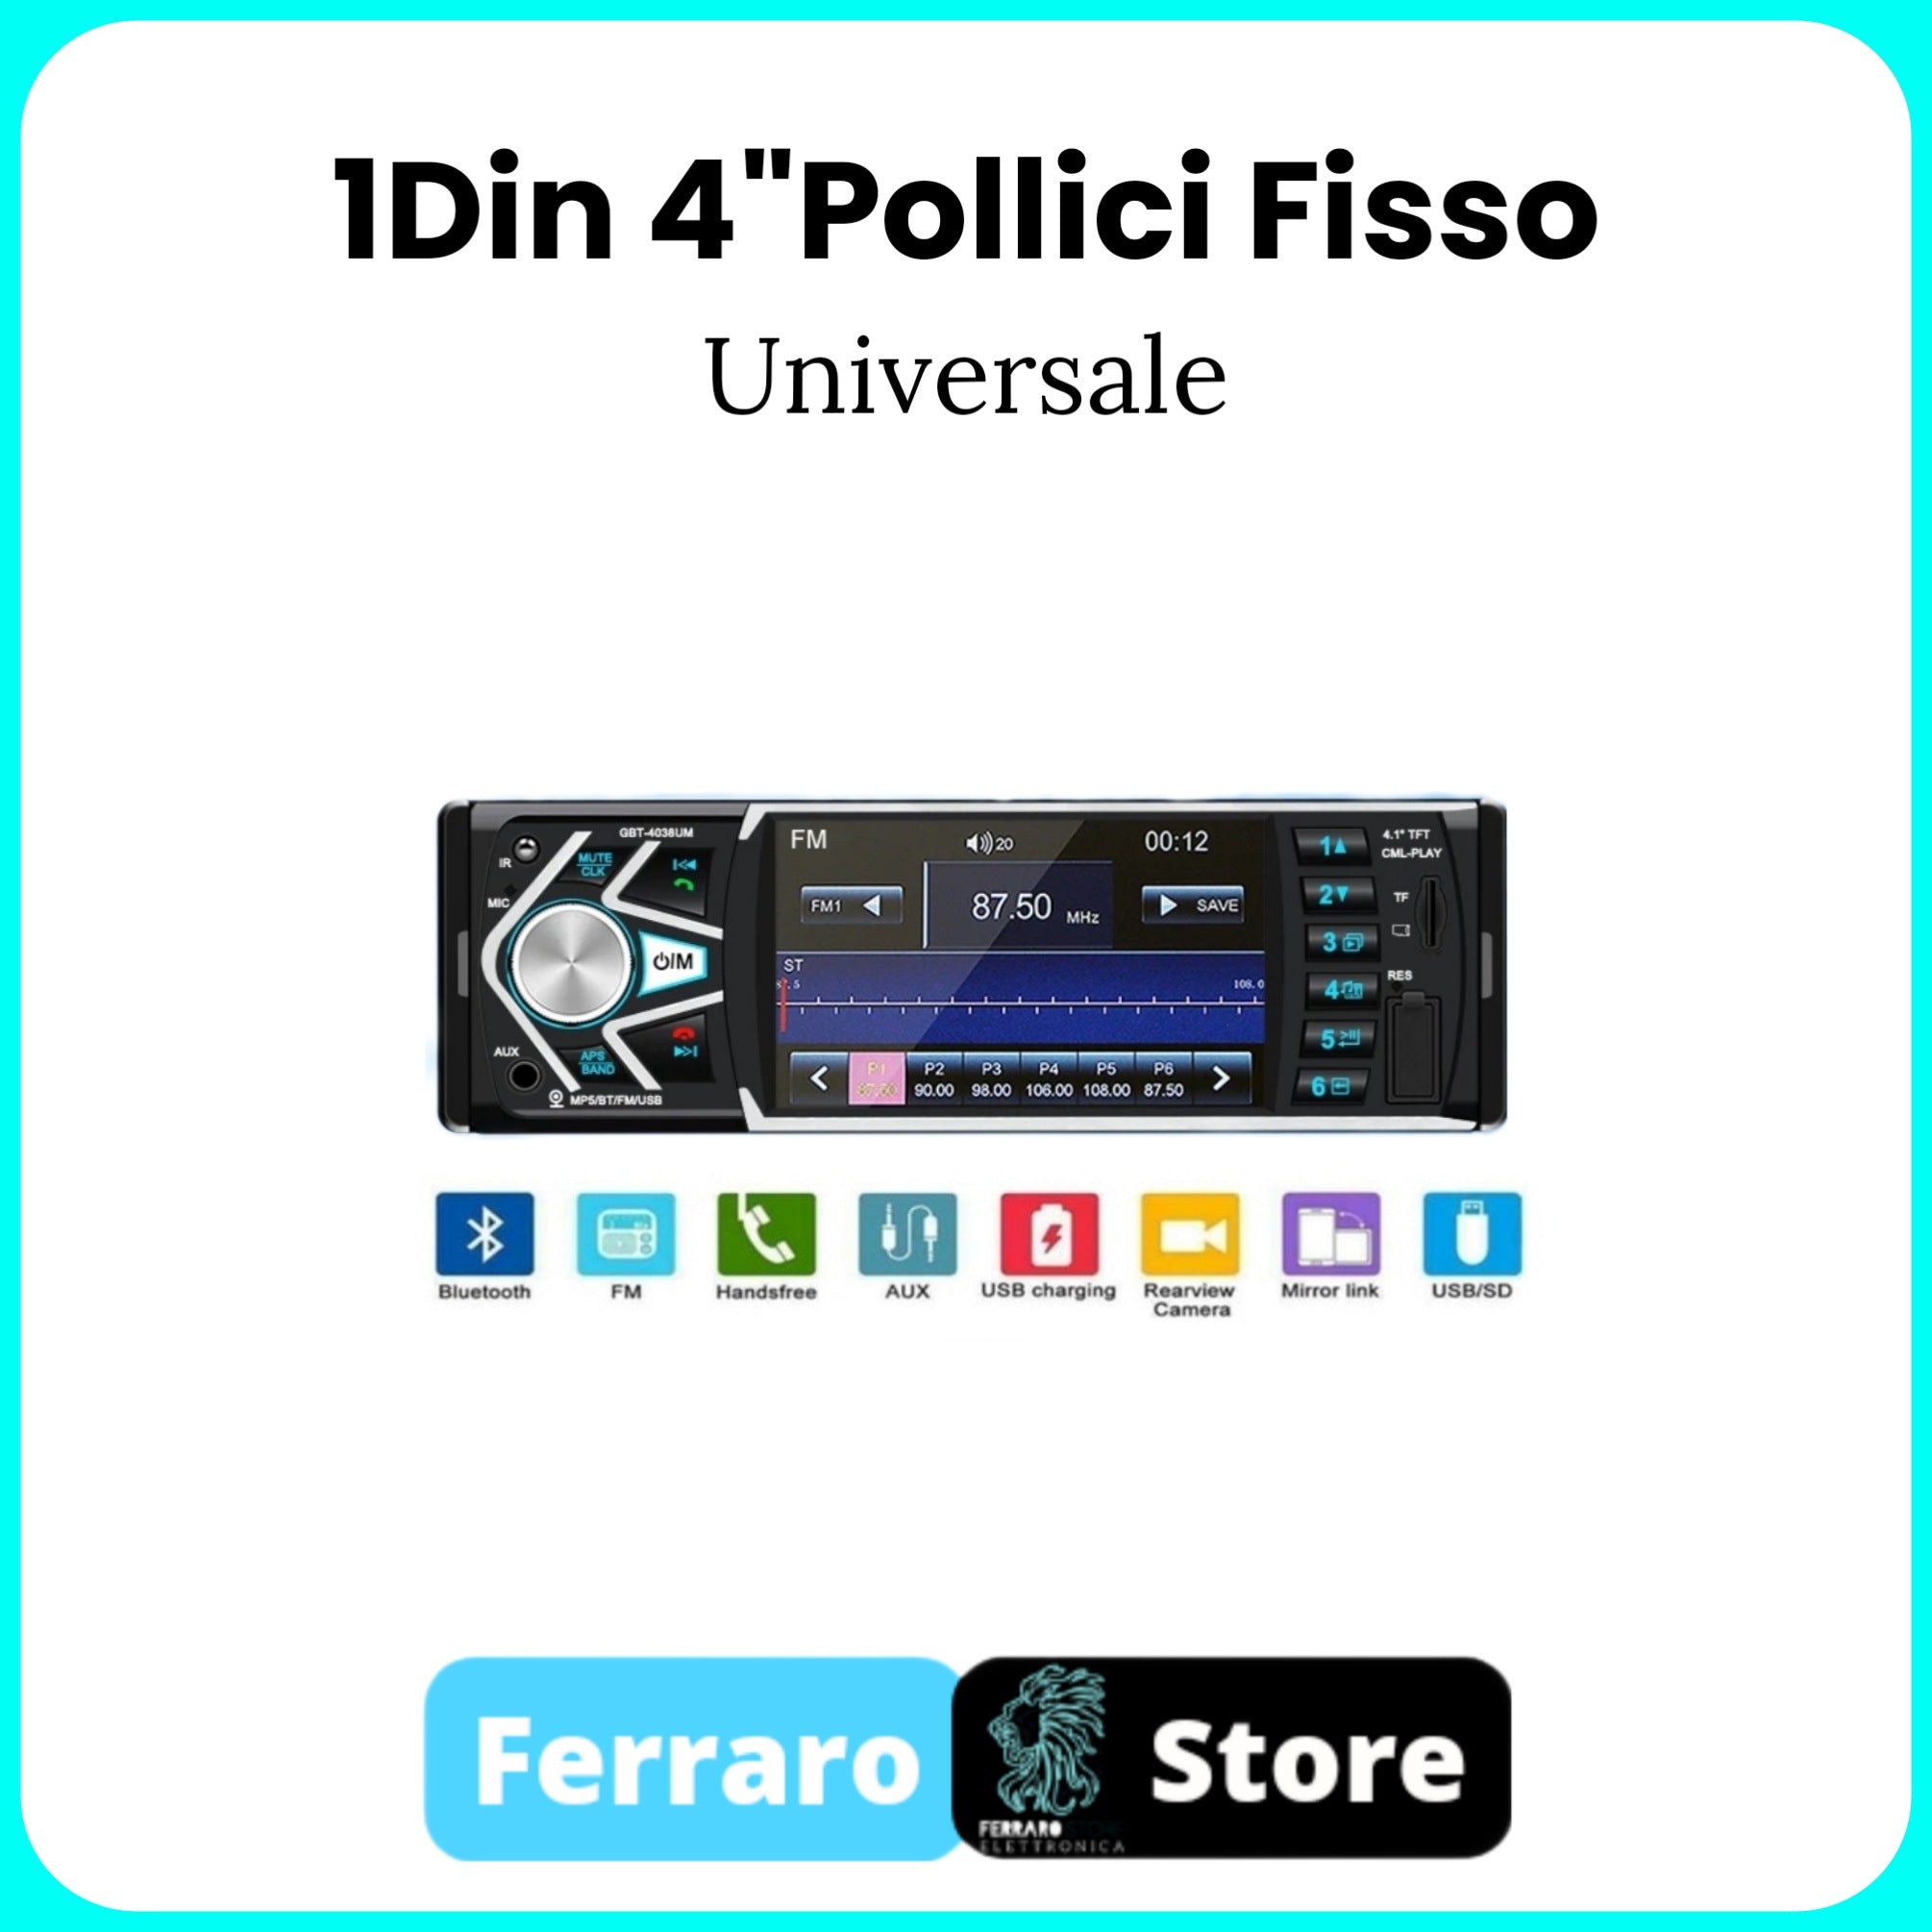 Autoradio Universale [FISSO] - 1Din 4" Pollici, Bluetooth, Radio, AUX, USB.